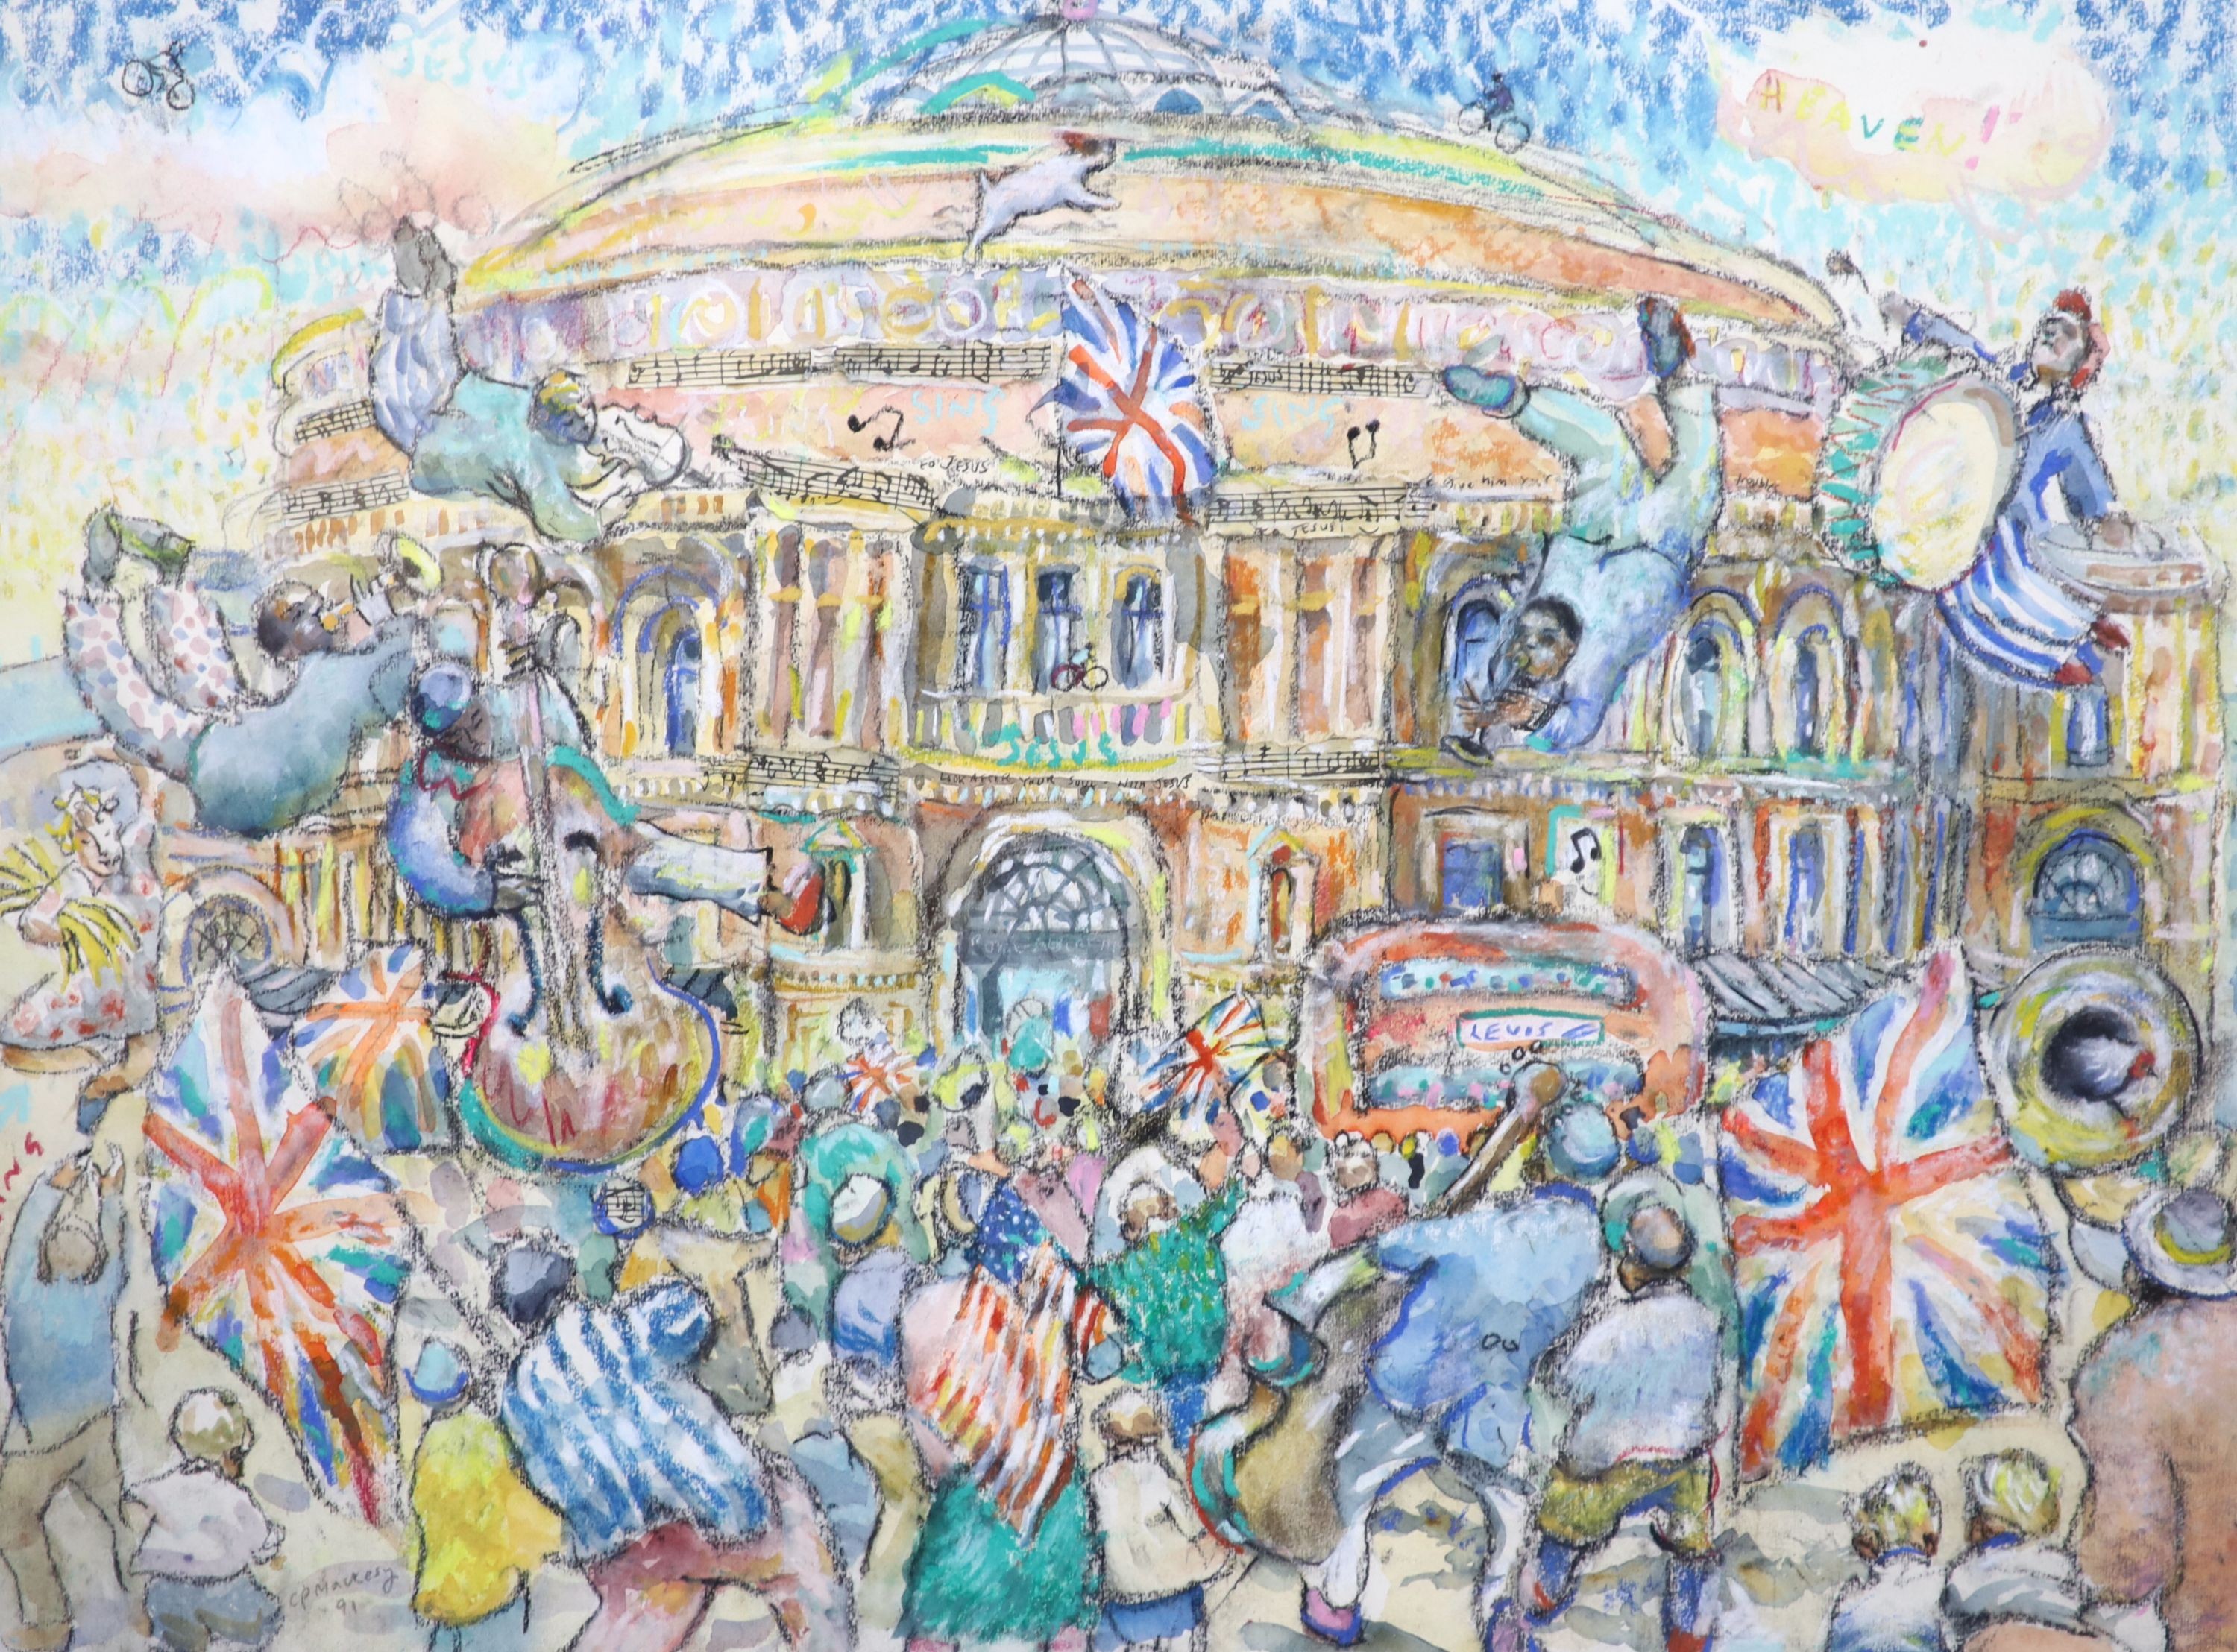 Charles Mackesy (1962-), Royal Albert Hall 2, pastel and watercolour, 45 x 61cm